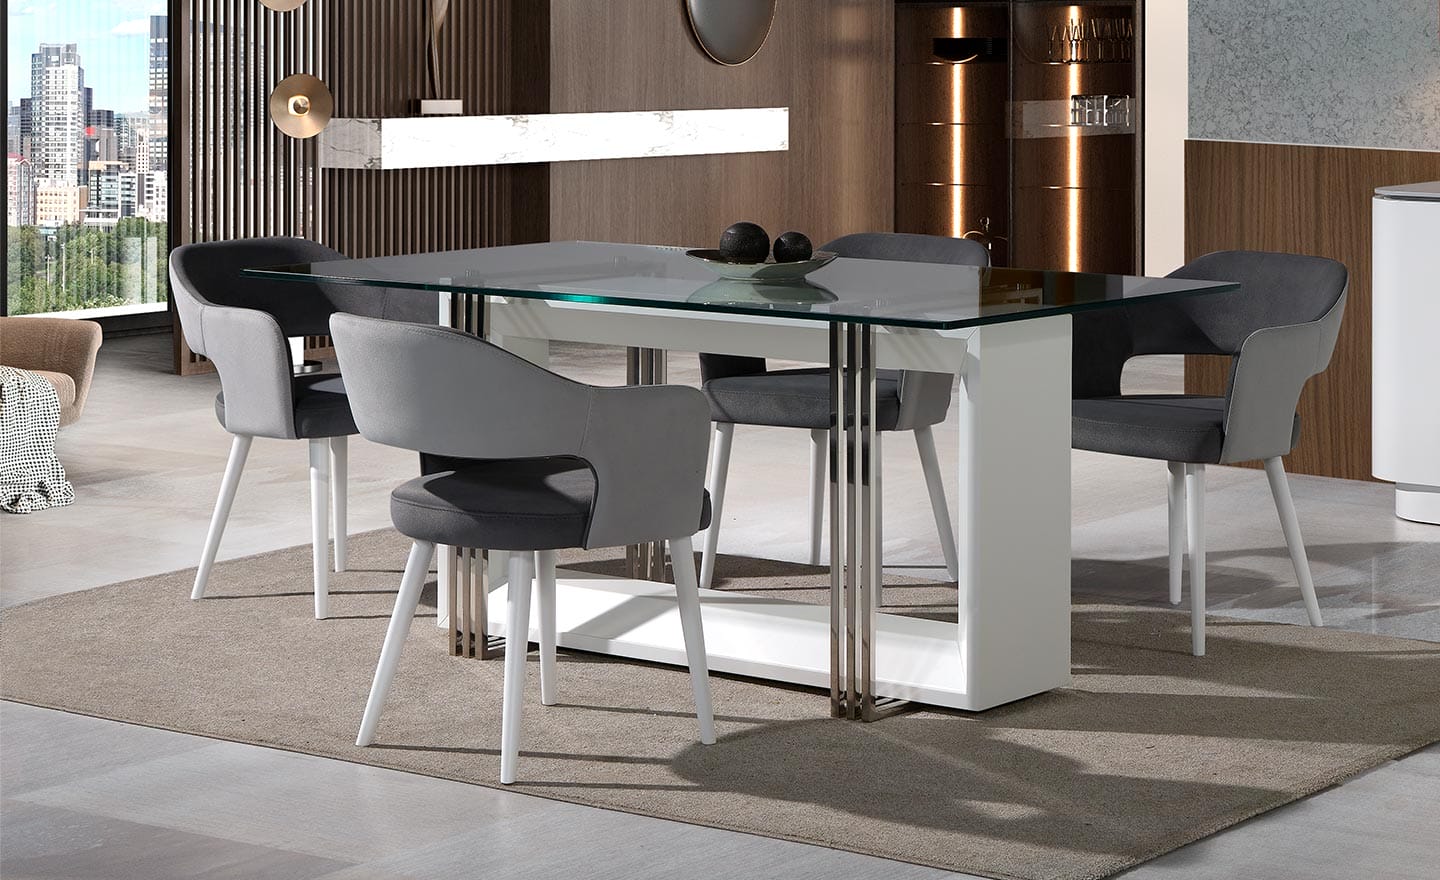 Mesa de Jantar Eclipse - Mesa de Vidro com Design Elegante